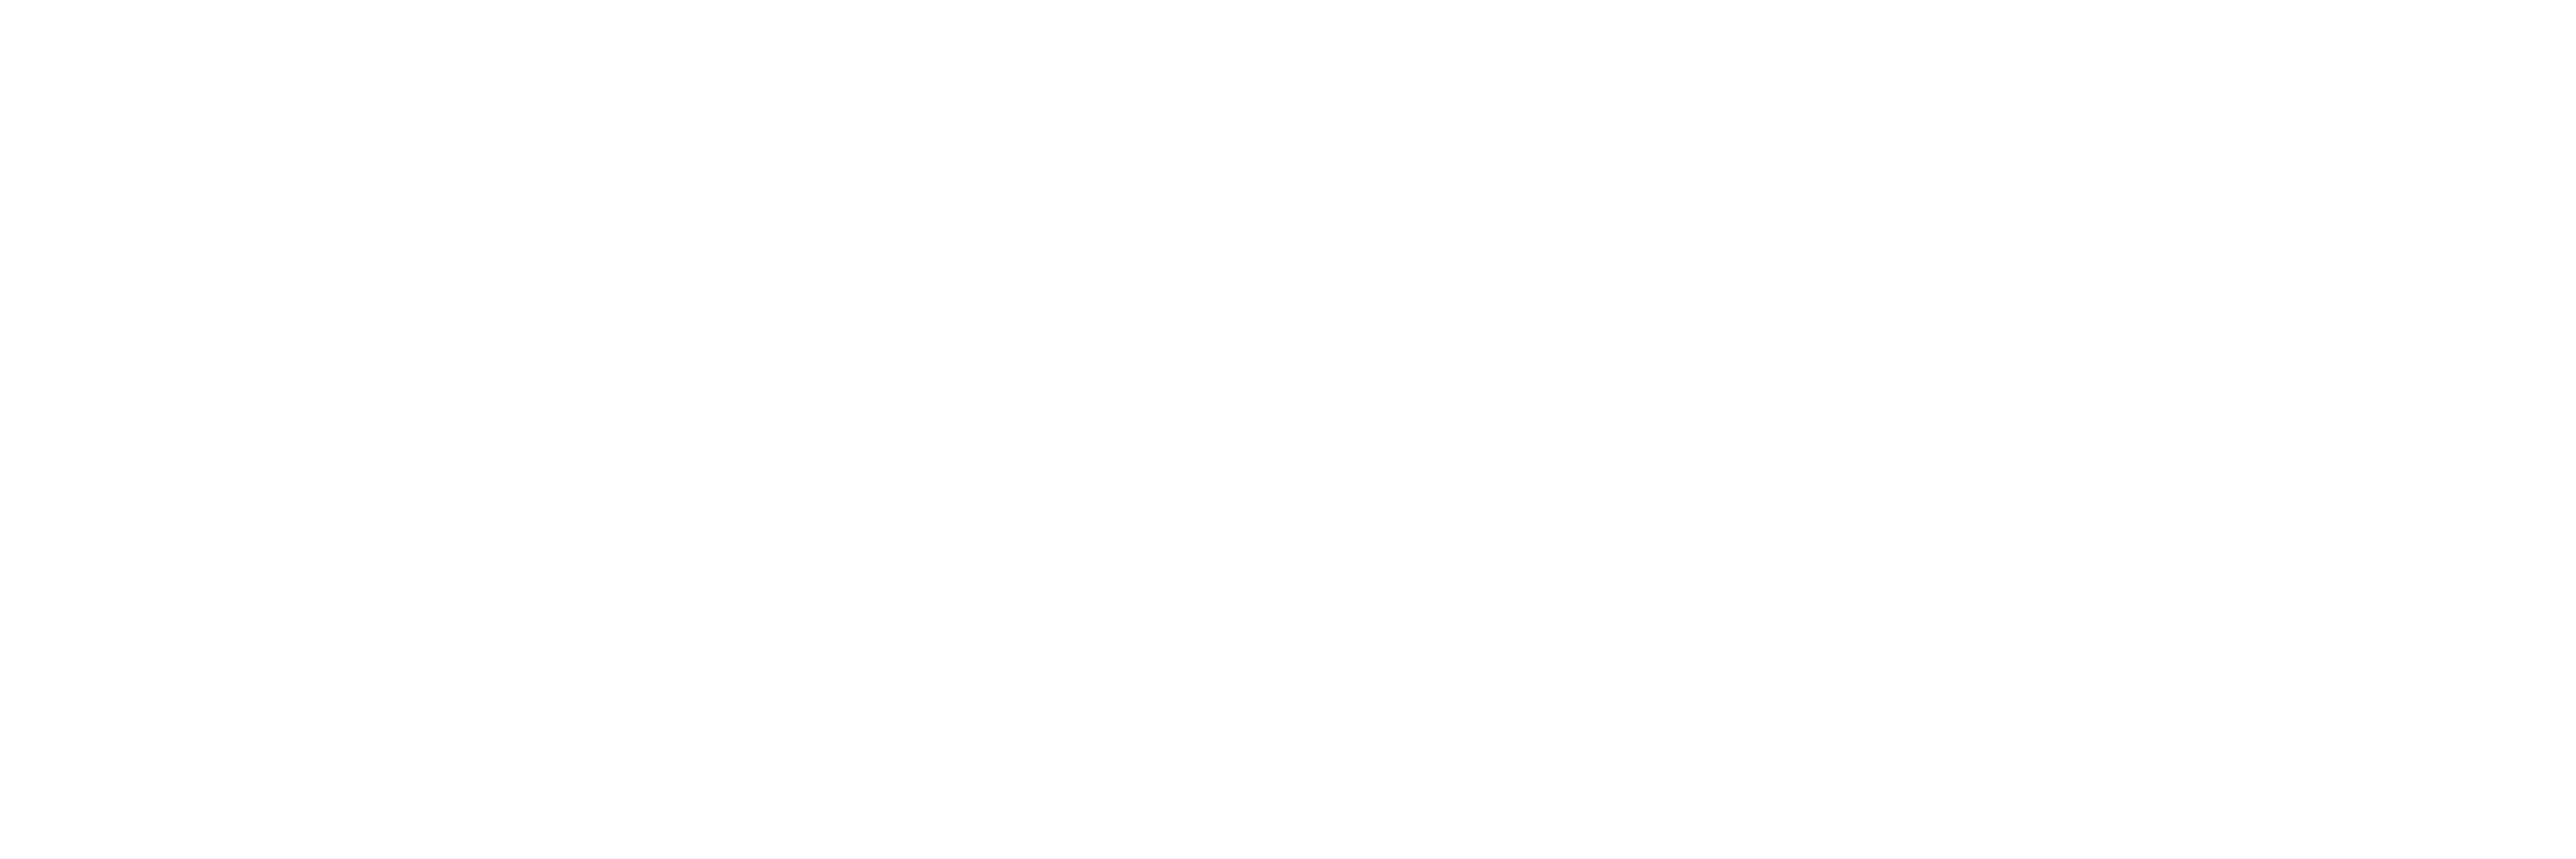 Lifewire Logo